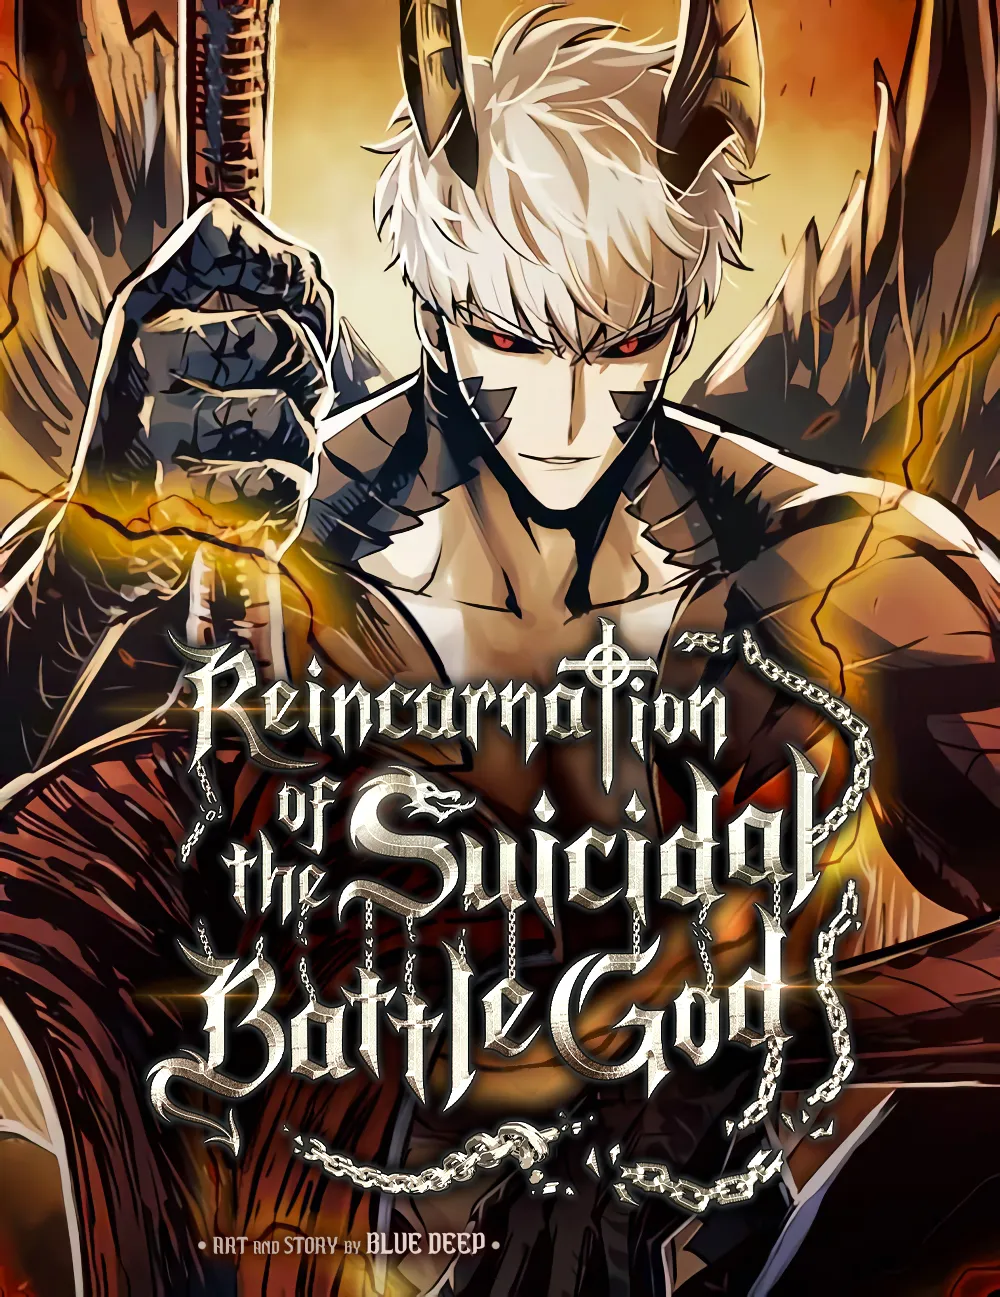 Reincarnation of the Suicidal Battle God